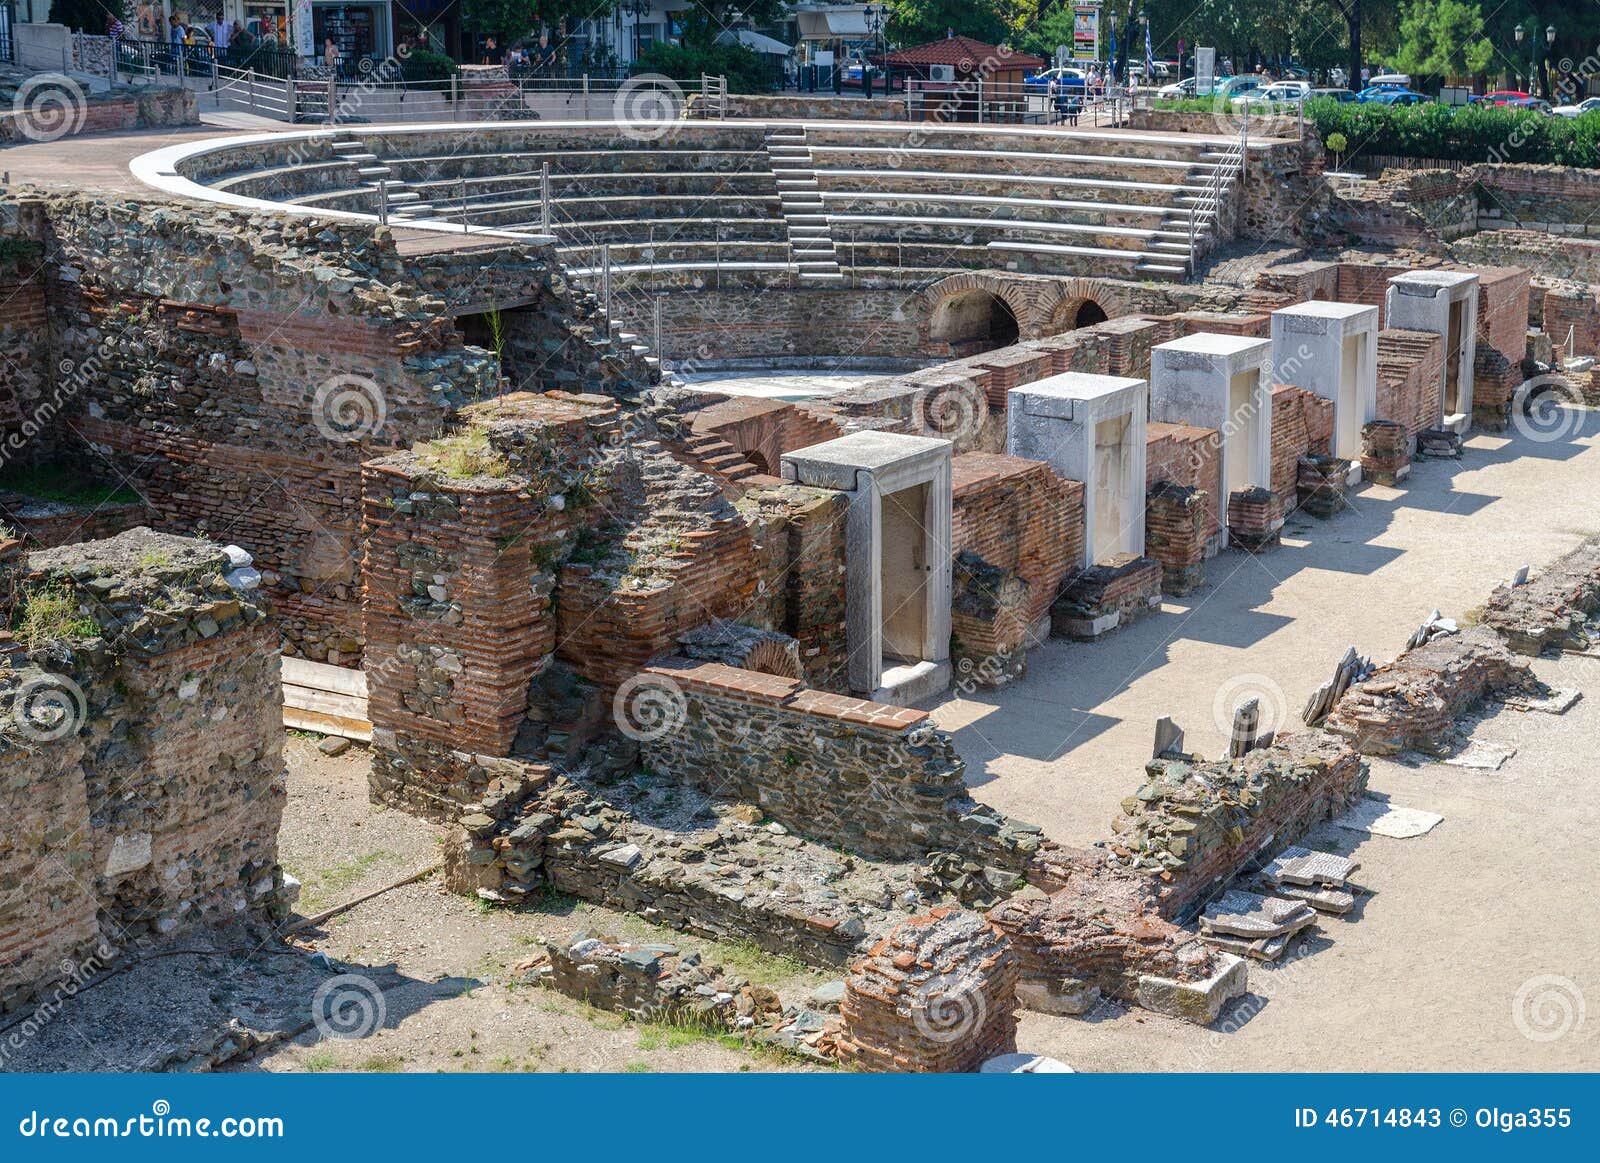 greece, thessaloniki, the ruins of the roman forum (i - iv century ad.)